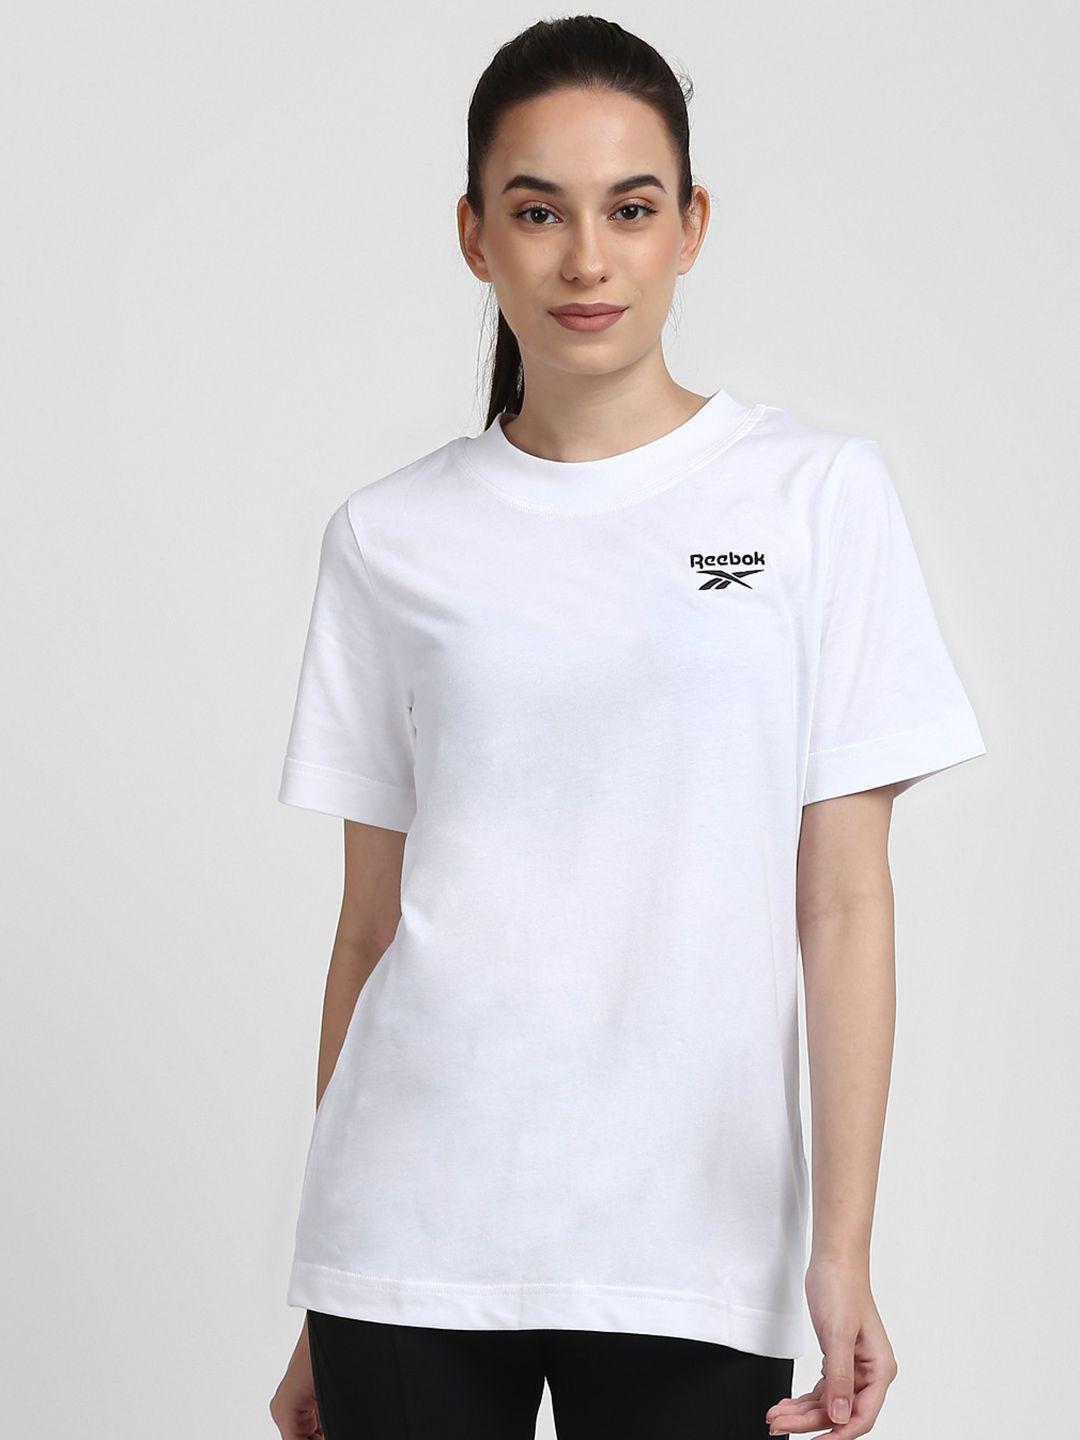 reebok women white brand logo printed pure cotton training or gym pure cotton t-shirt